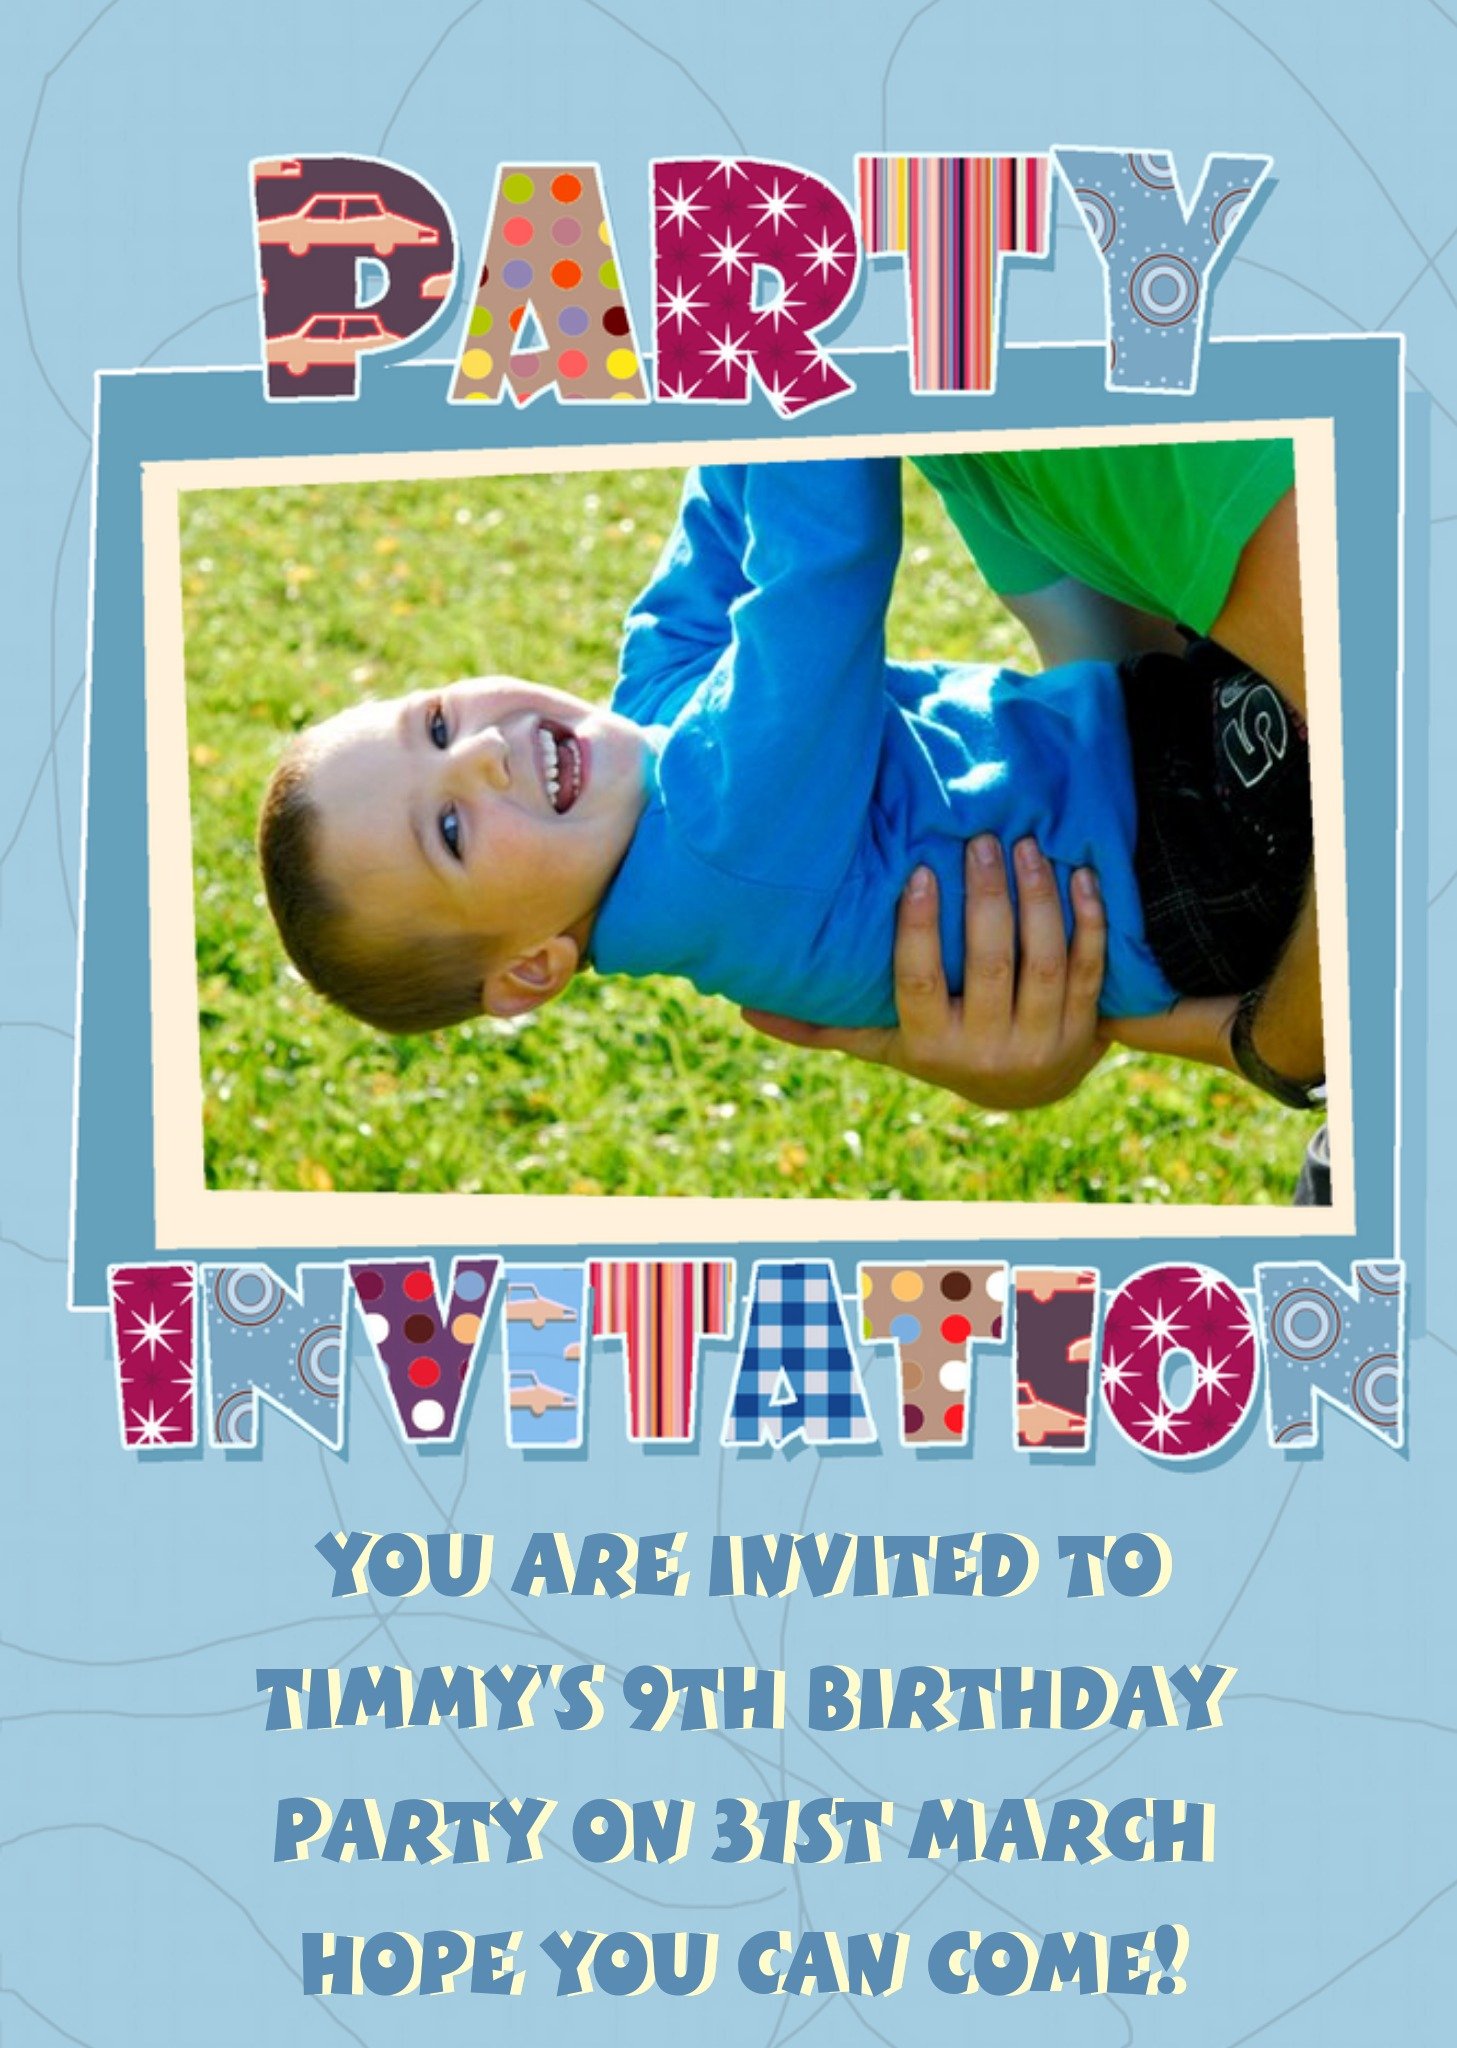 Moonpig Little Boy's Personalised Photo Upload Party Invitation Card, Large